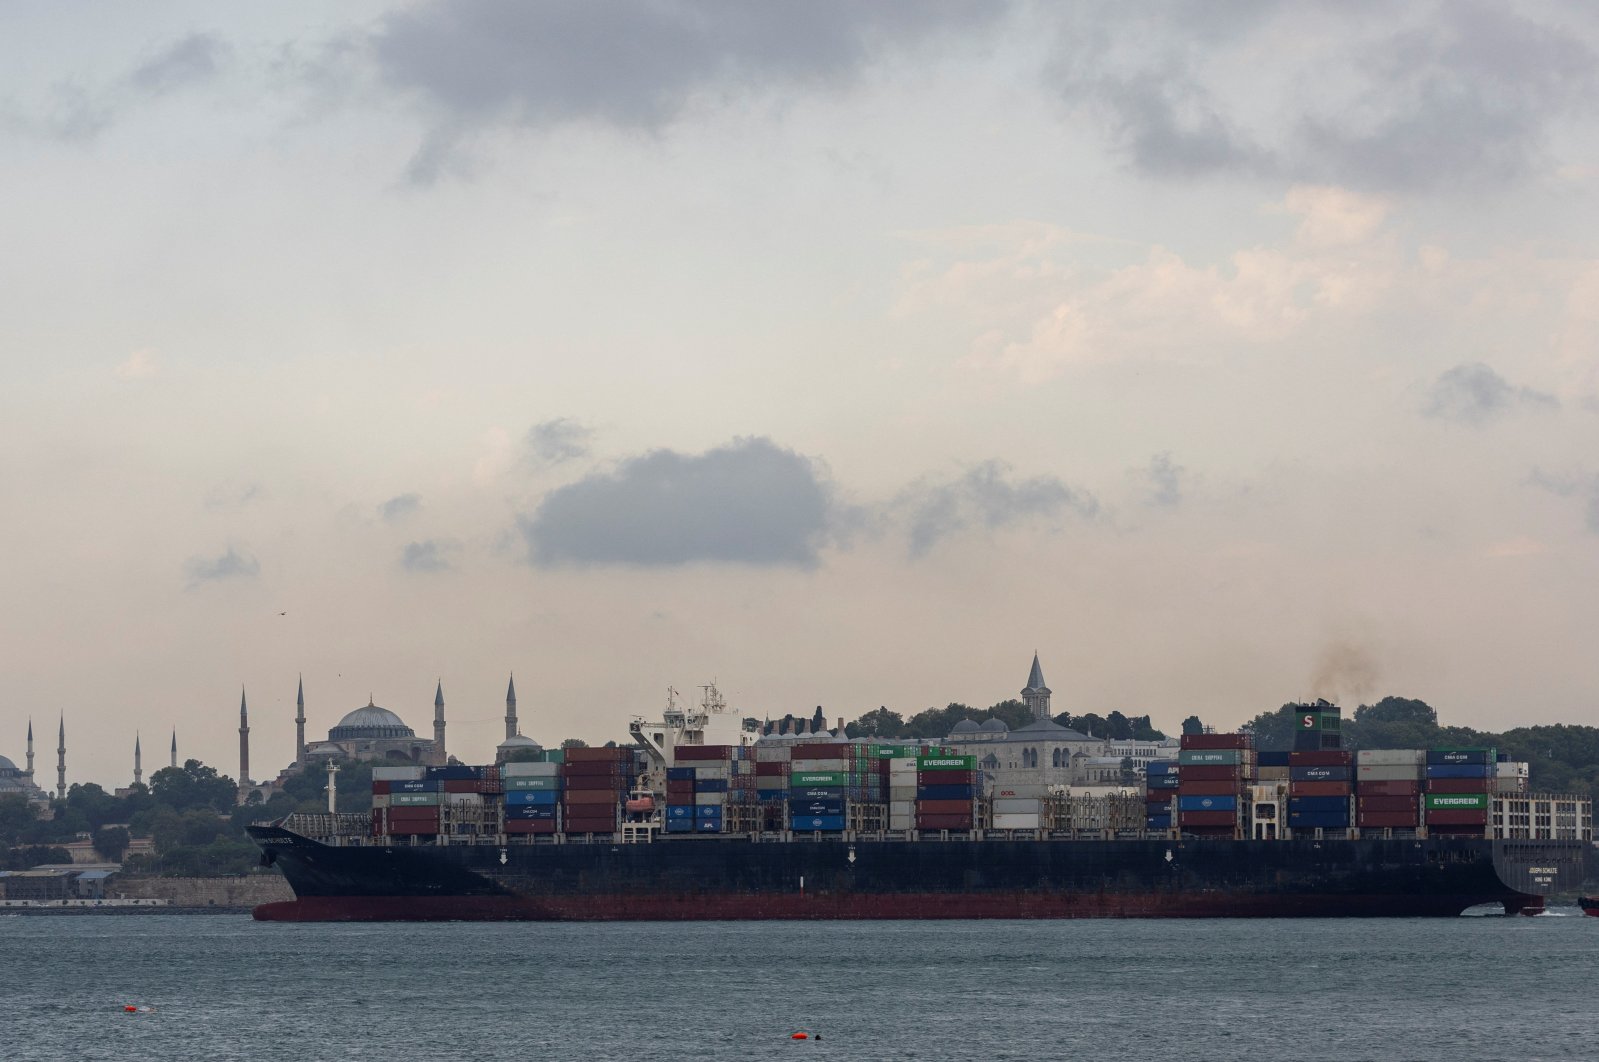 Türkiye export climate rebounds on improving demand in key markets